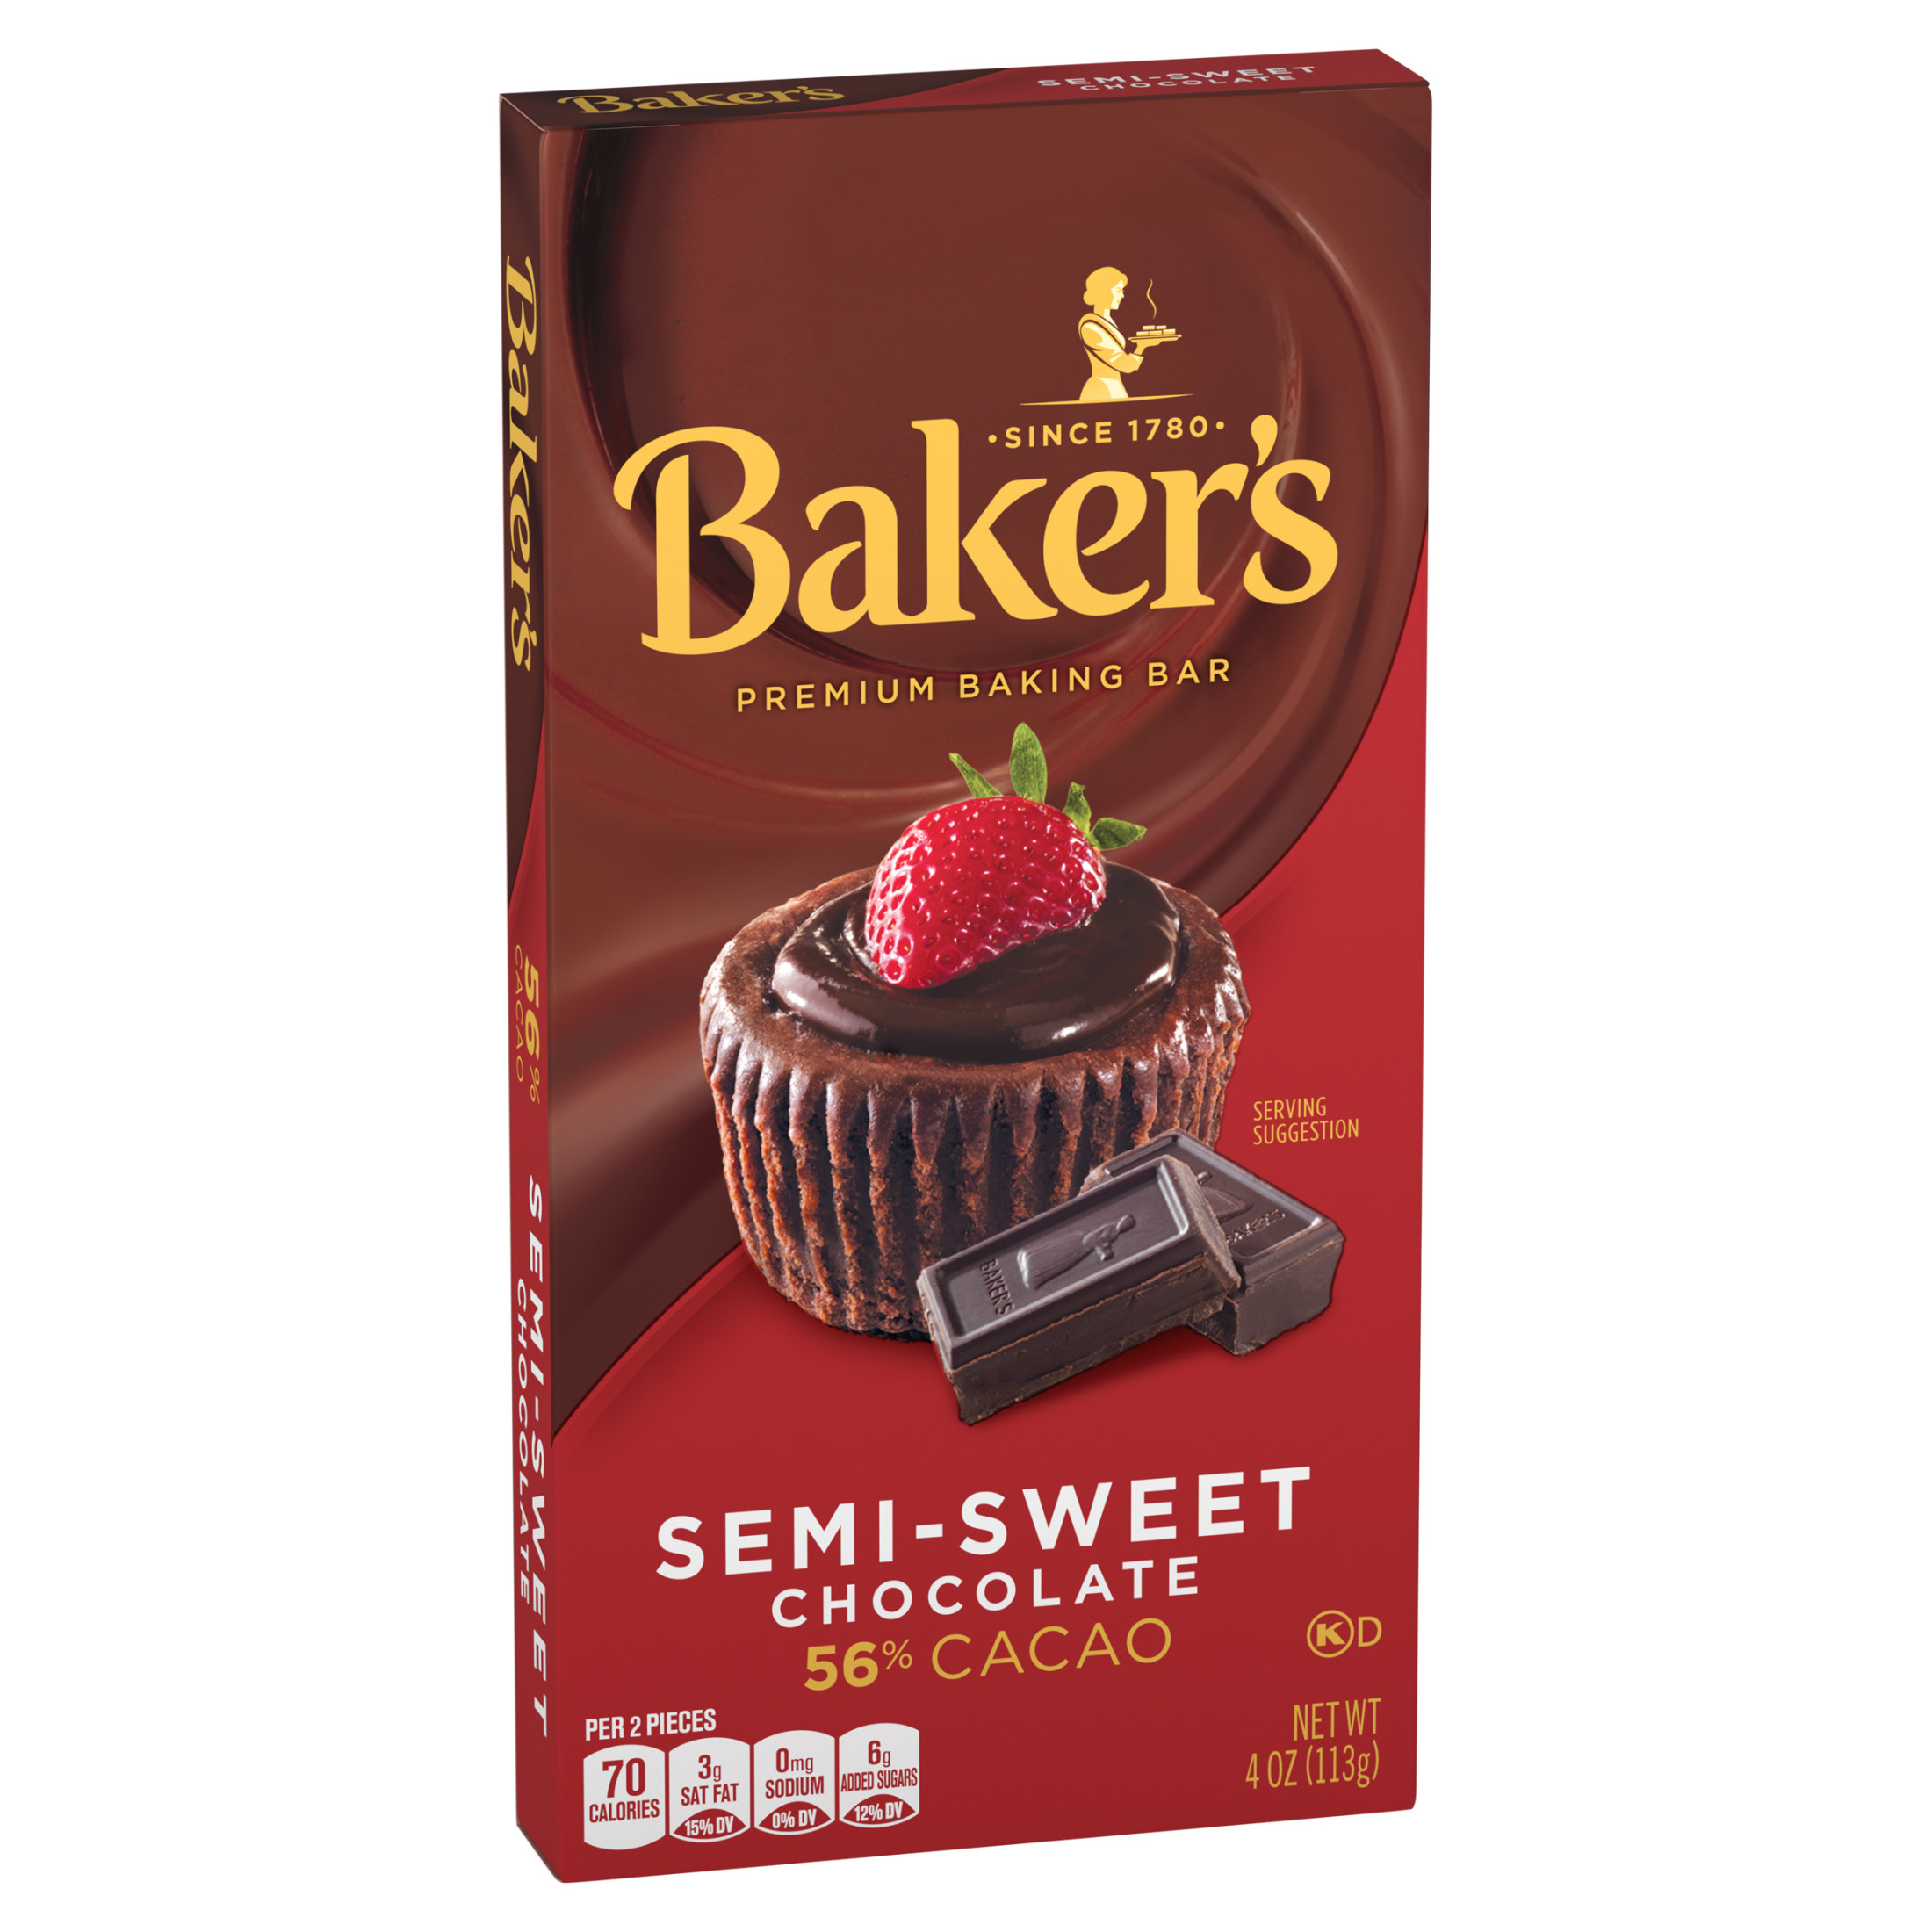 Baker's Semi-Sweet Chocolate Premium Baking Bar with 56% Cacao, 4 oz Box - image 5 of 11